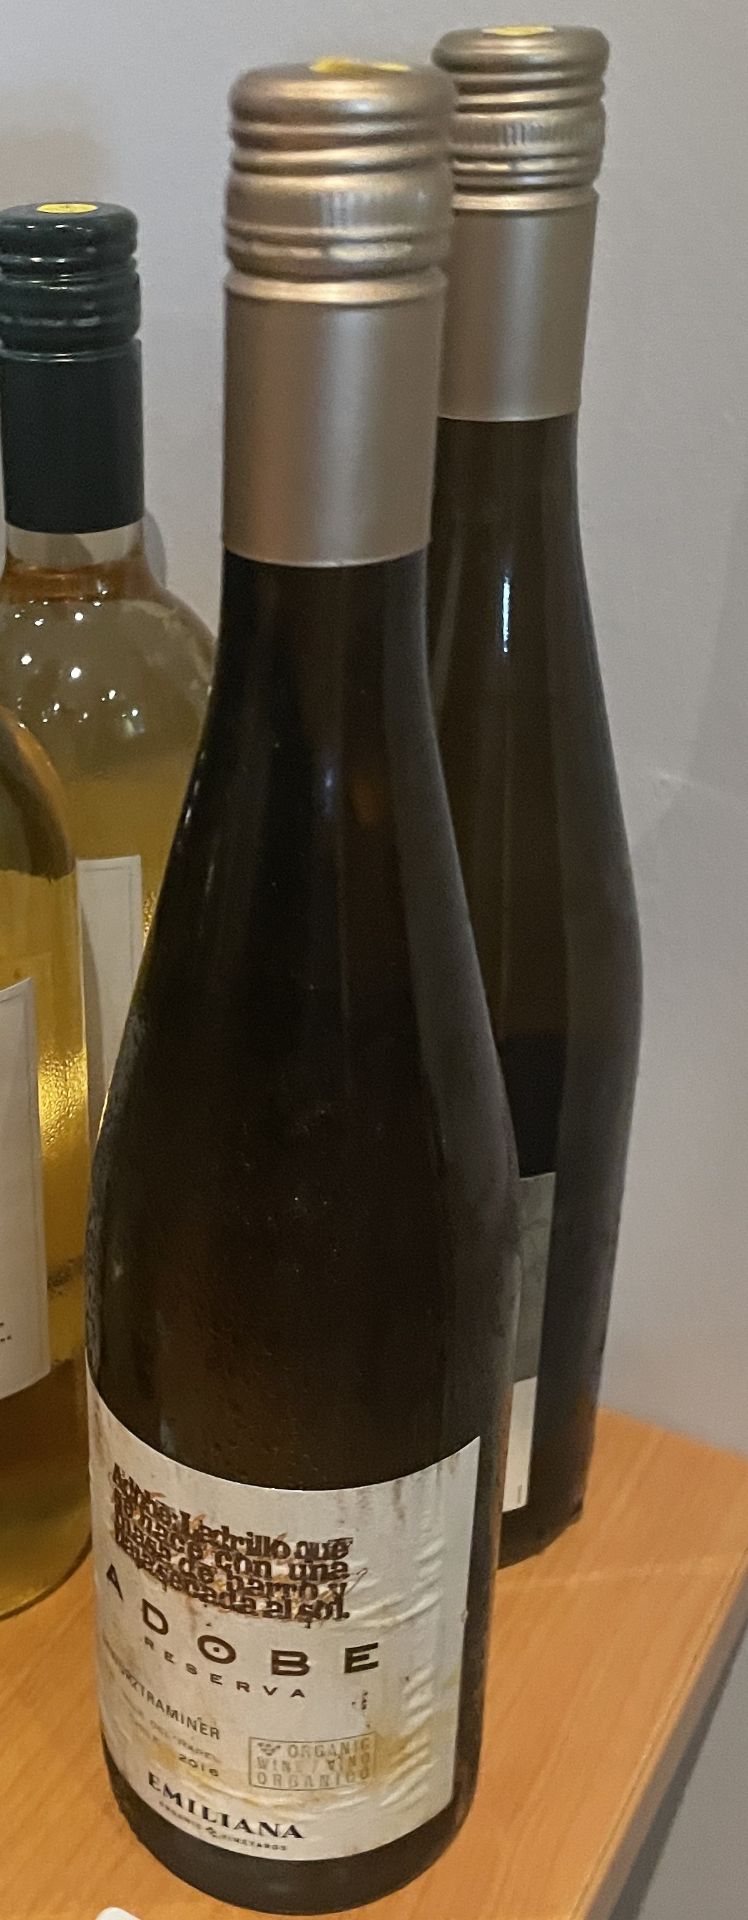 3 x Bottles of Emiliani Adobe Reserva Organic Wine - New / Unopened - Ref: JMR151 - CL782 - - Image 2 of 3